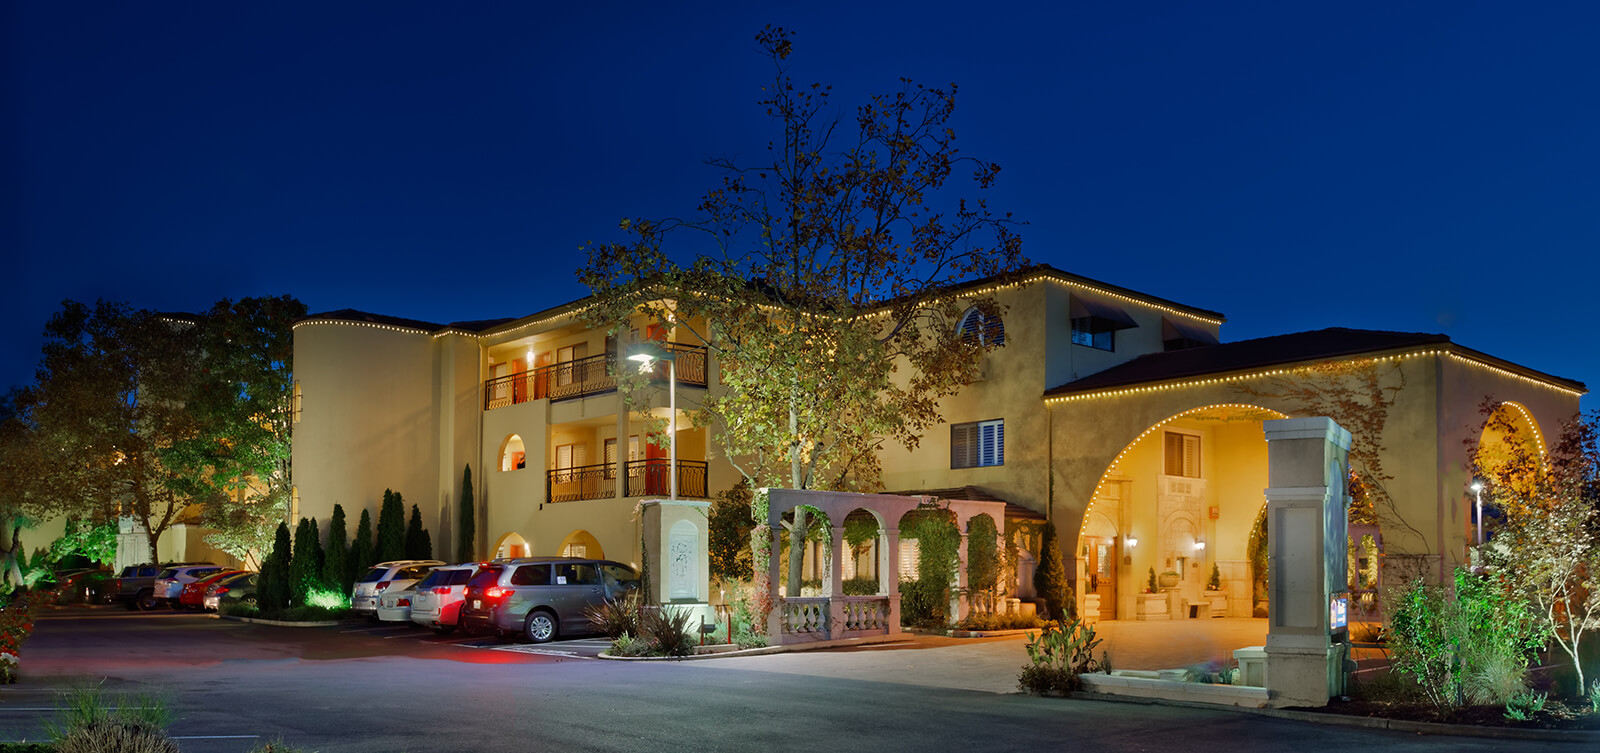 Healdsburg, Ca Hotel In The Heart Of Wine Country - Best Western Dry - Map Of Best Western Hotels In California